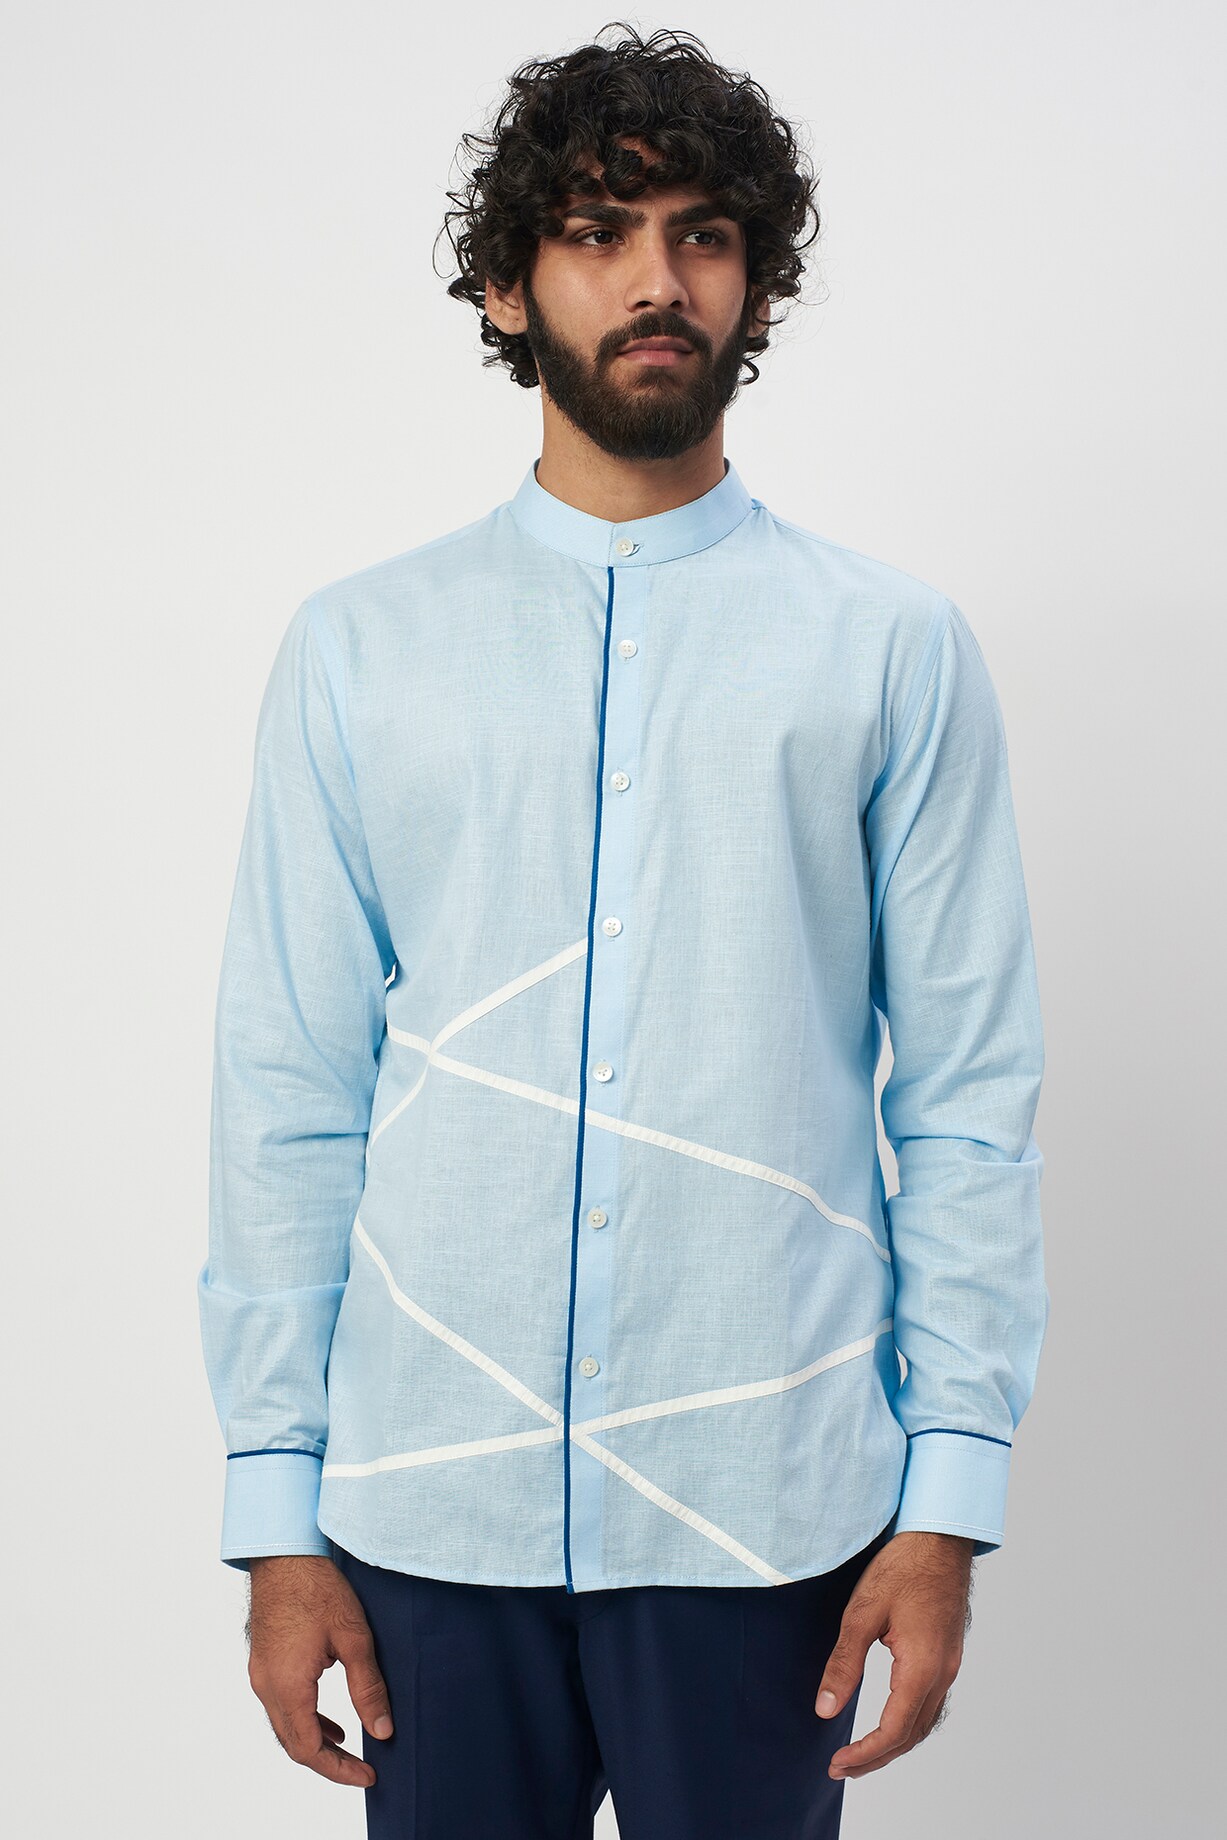 Buy Agape Men Sky Blue Linen Shirt at Pernia'sPopUpShopMen 2023